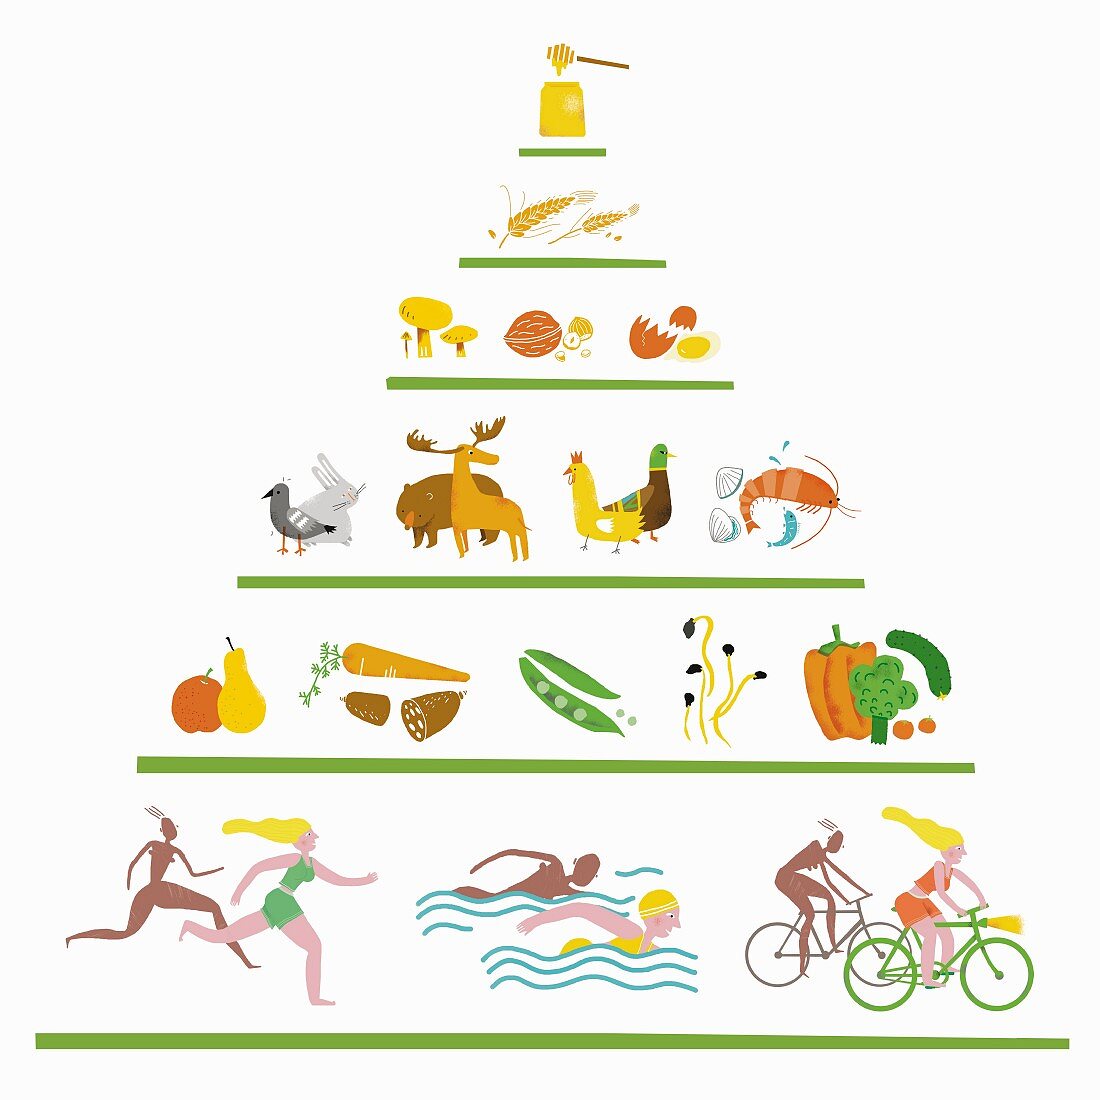 A Paleo nutrition pyramid